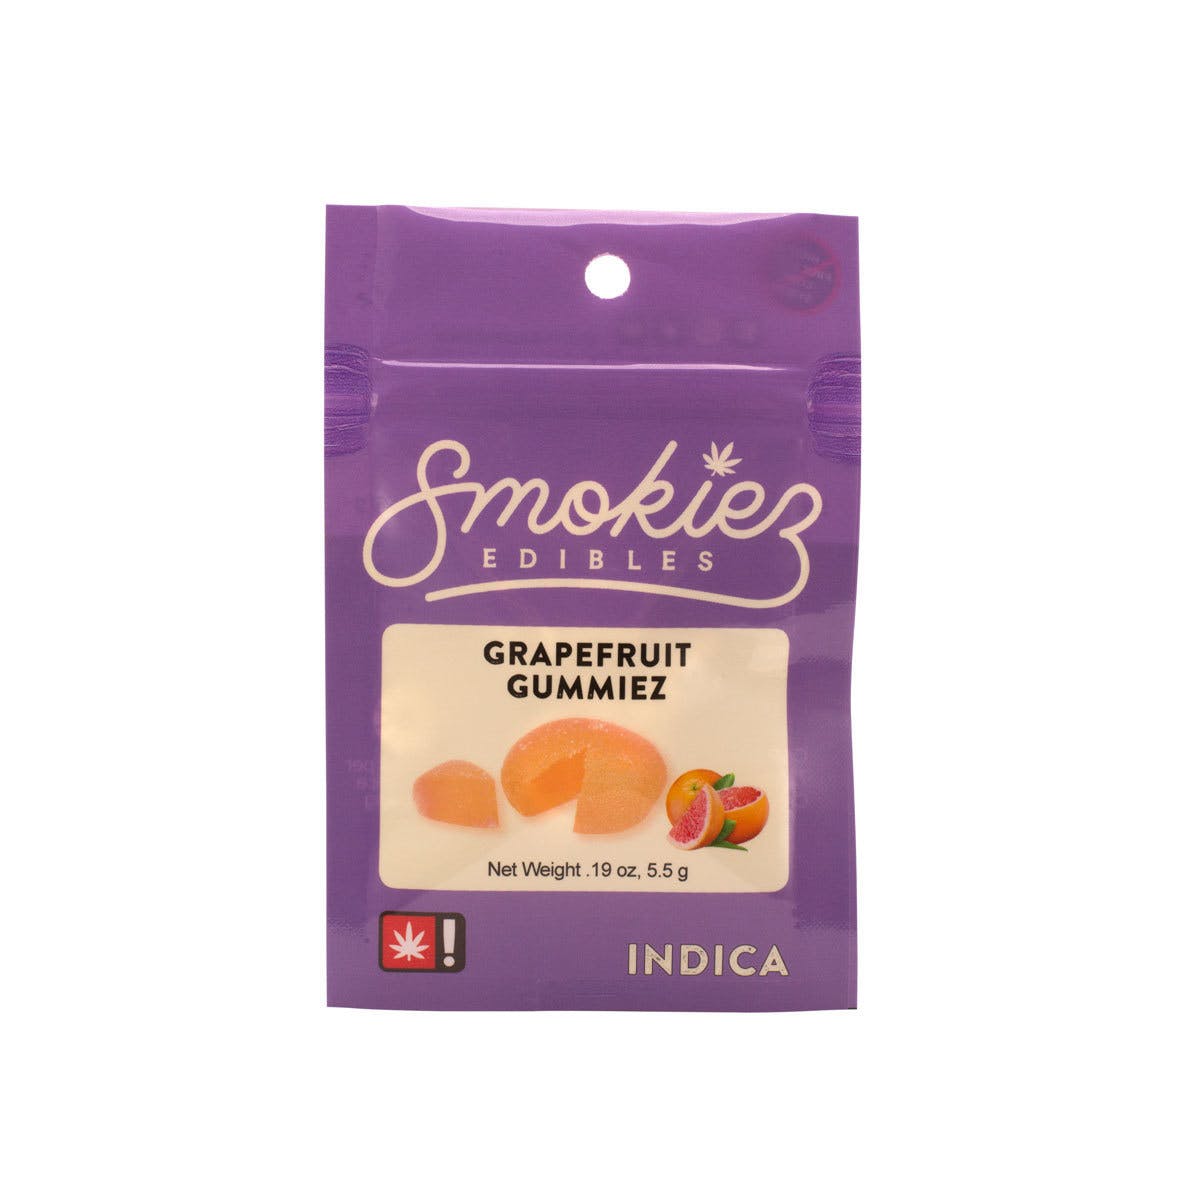 edible-smokiez-edibles-indica-grapefruit-gummiez-2c-50mg-2c-10-srv